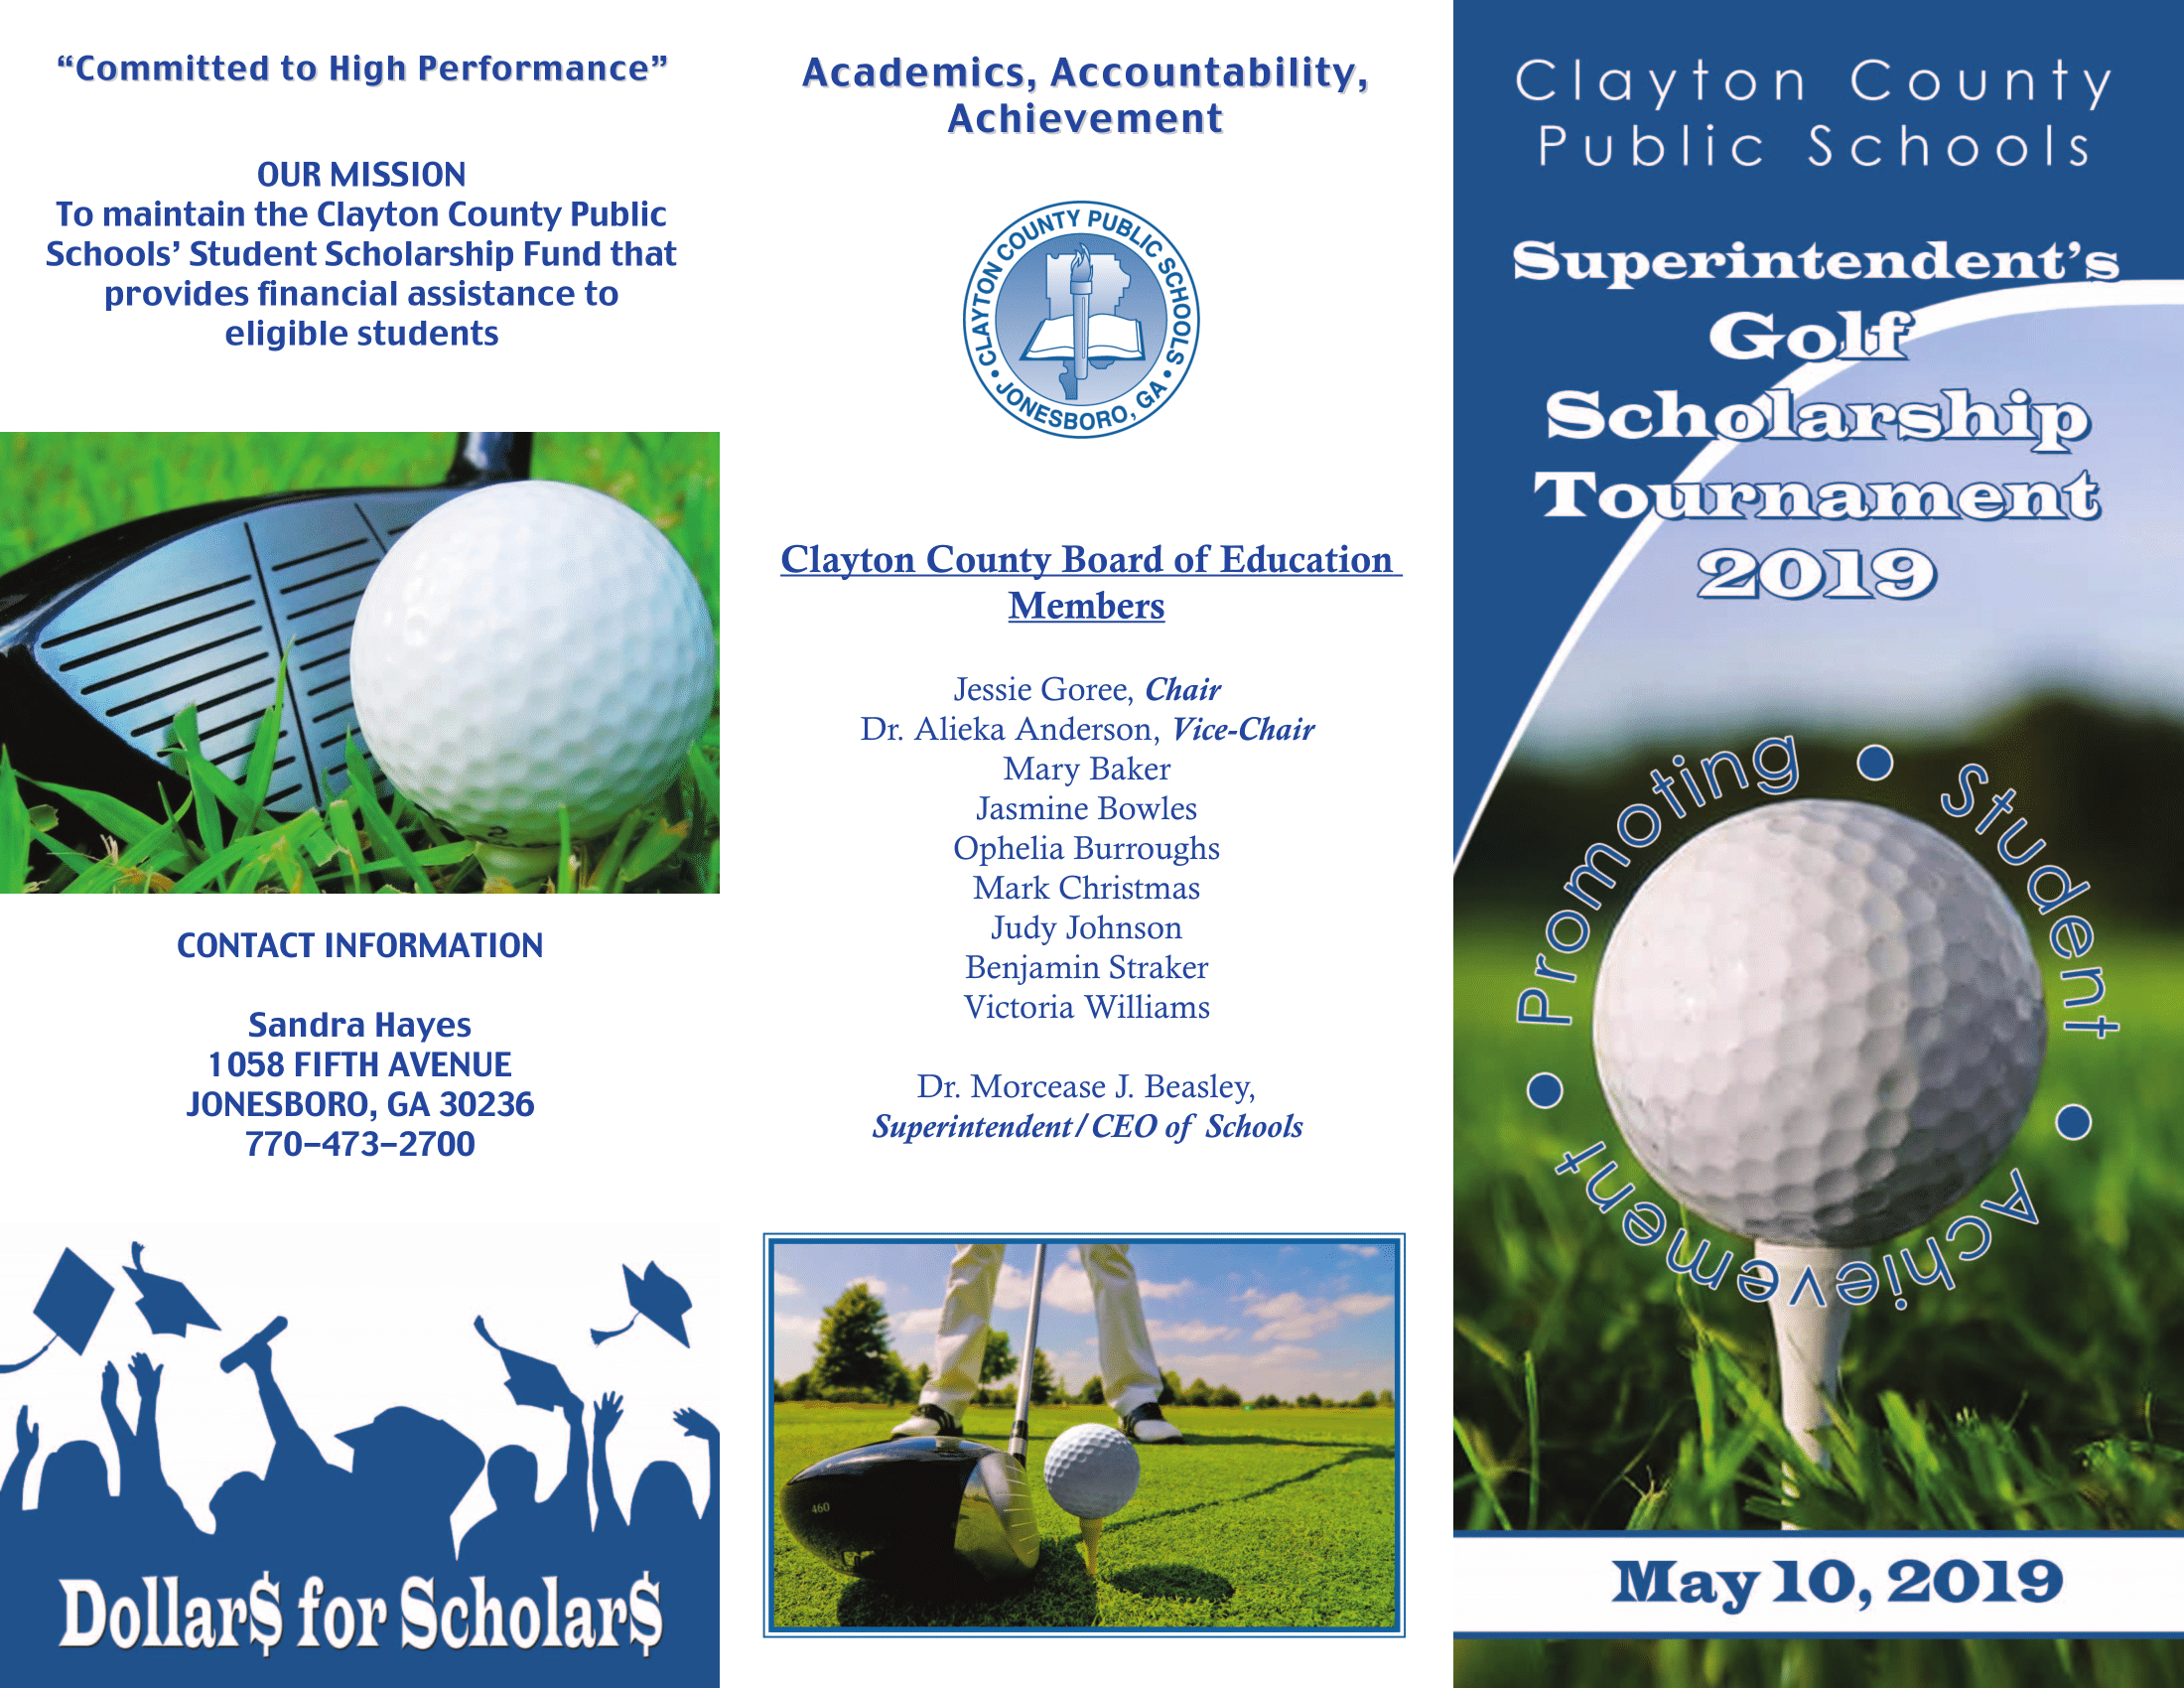 Superintendent's Golf Scholarship Tournament